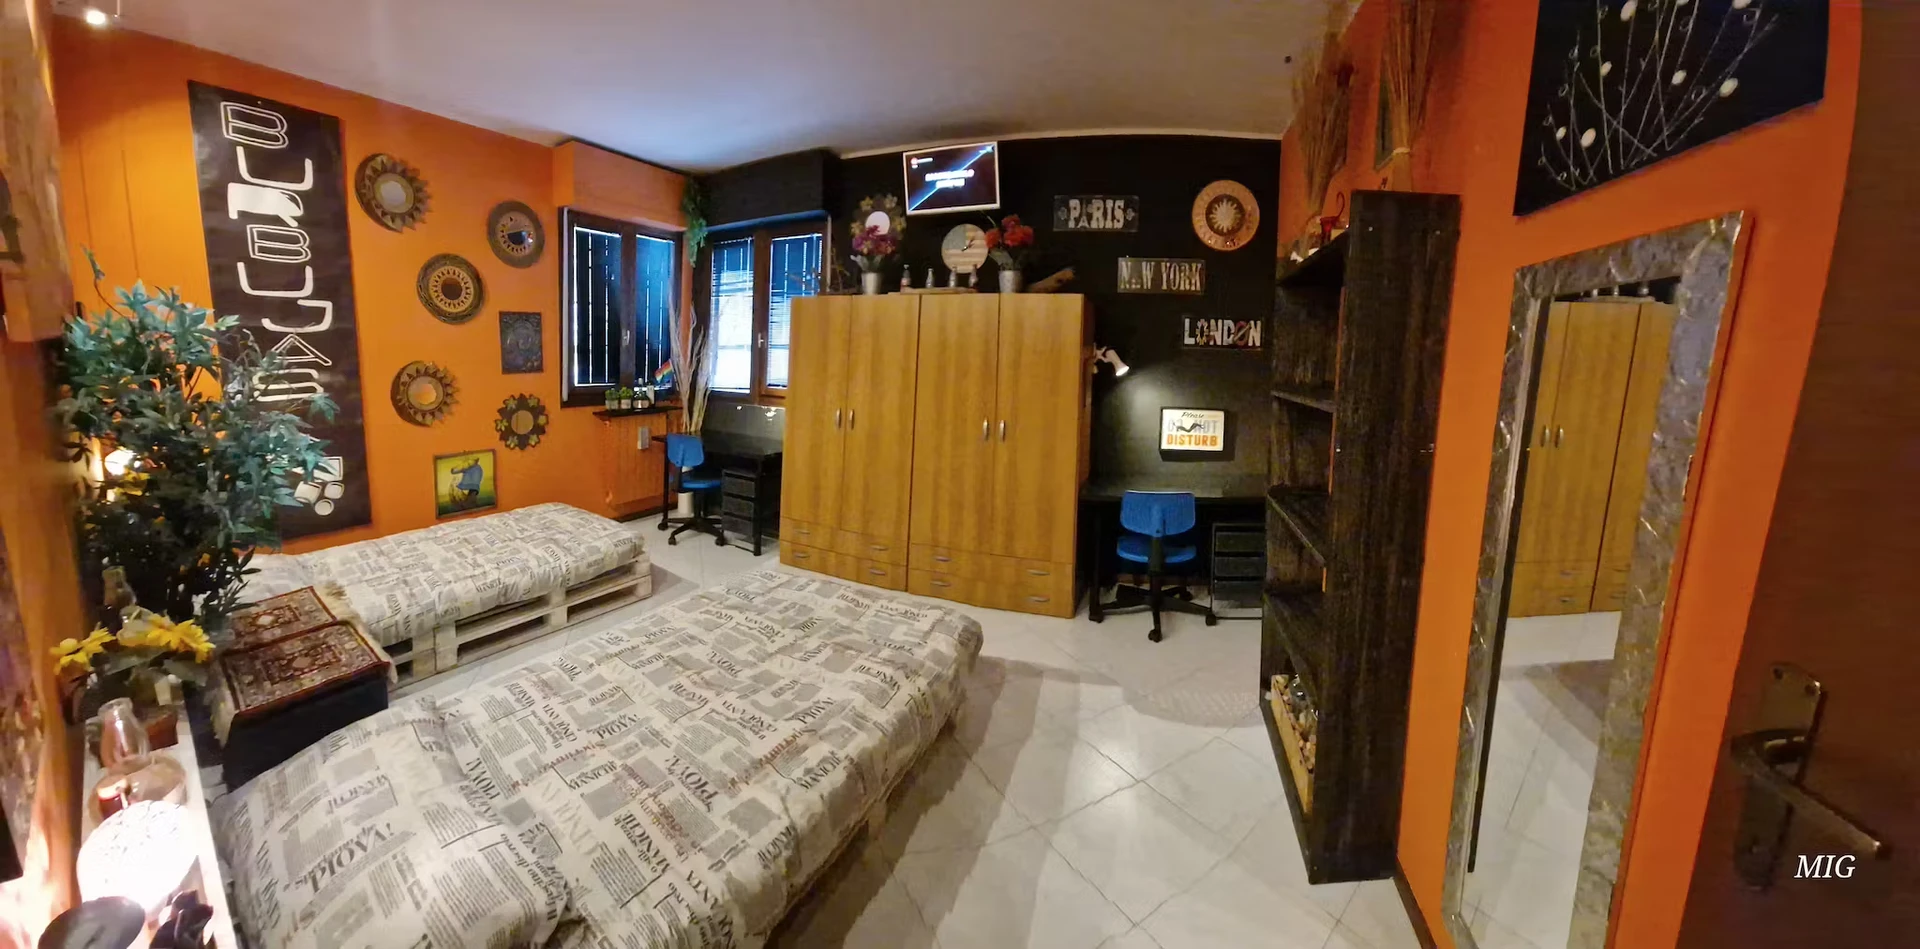 Shared room in 3-bedroom flat Bergamo